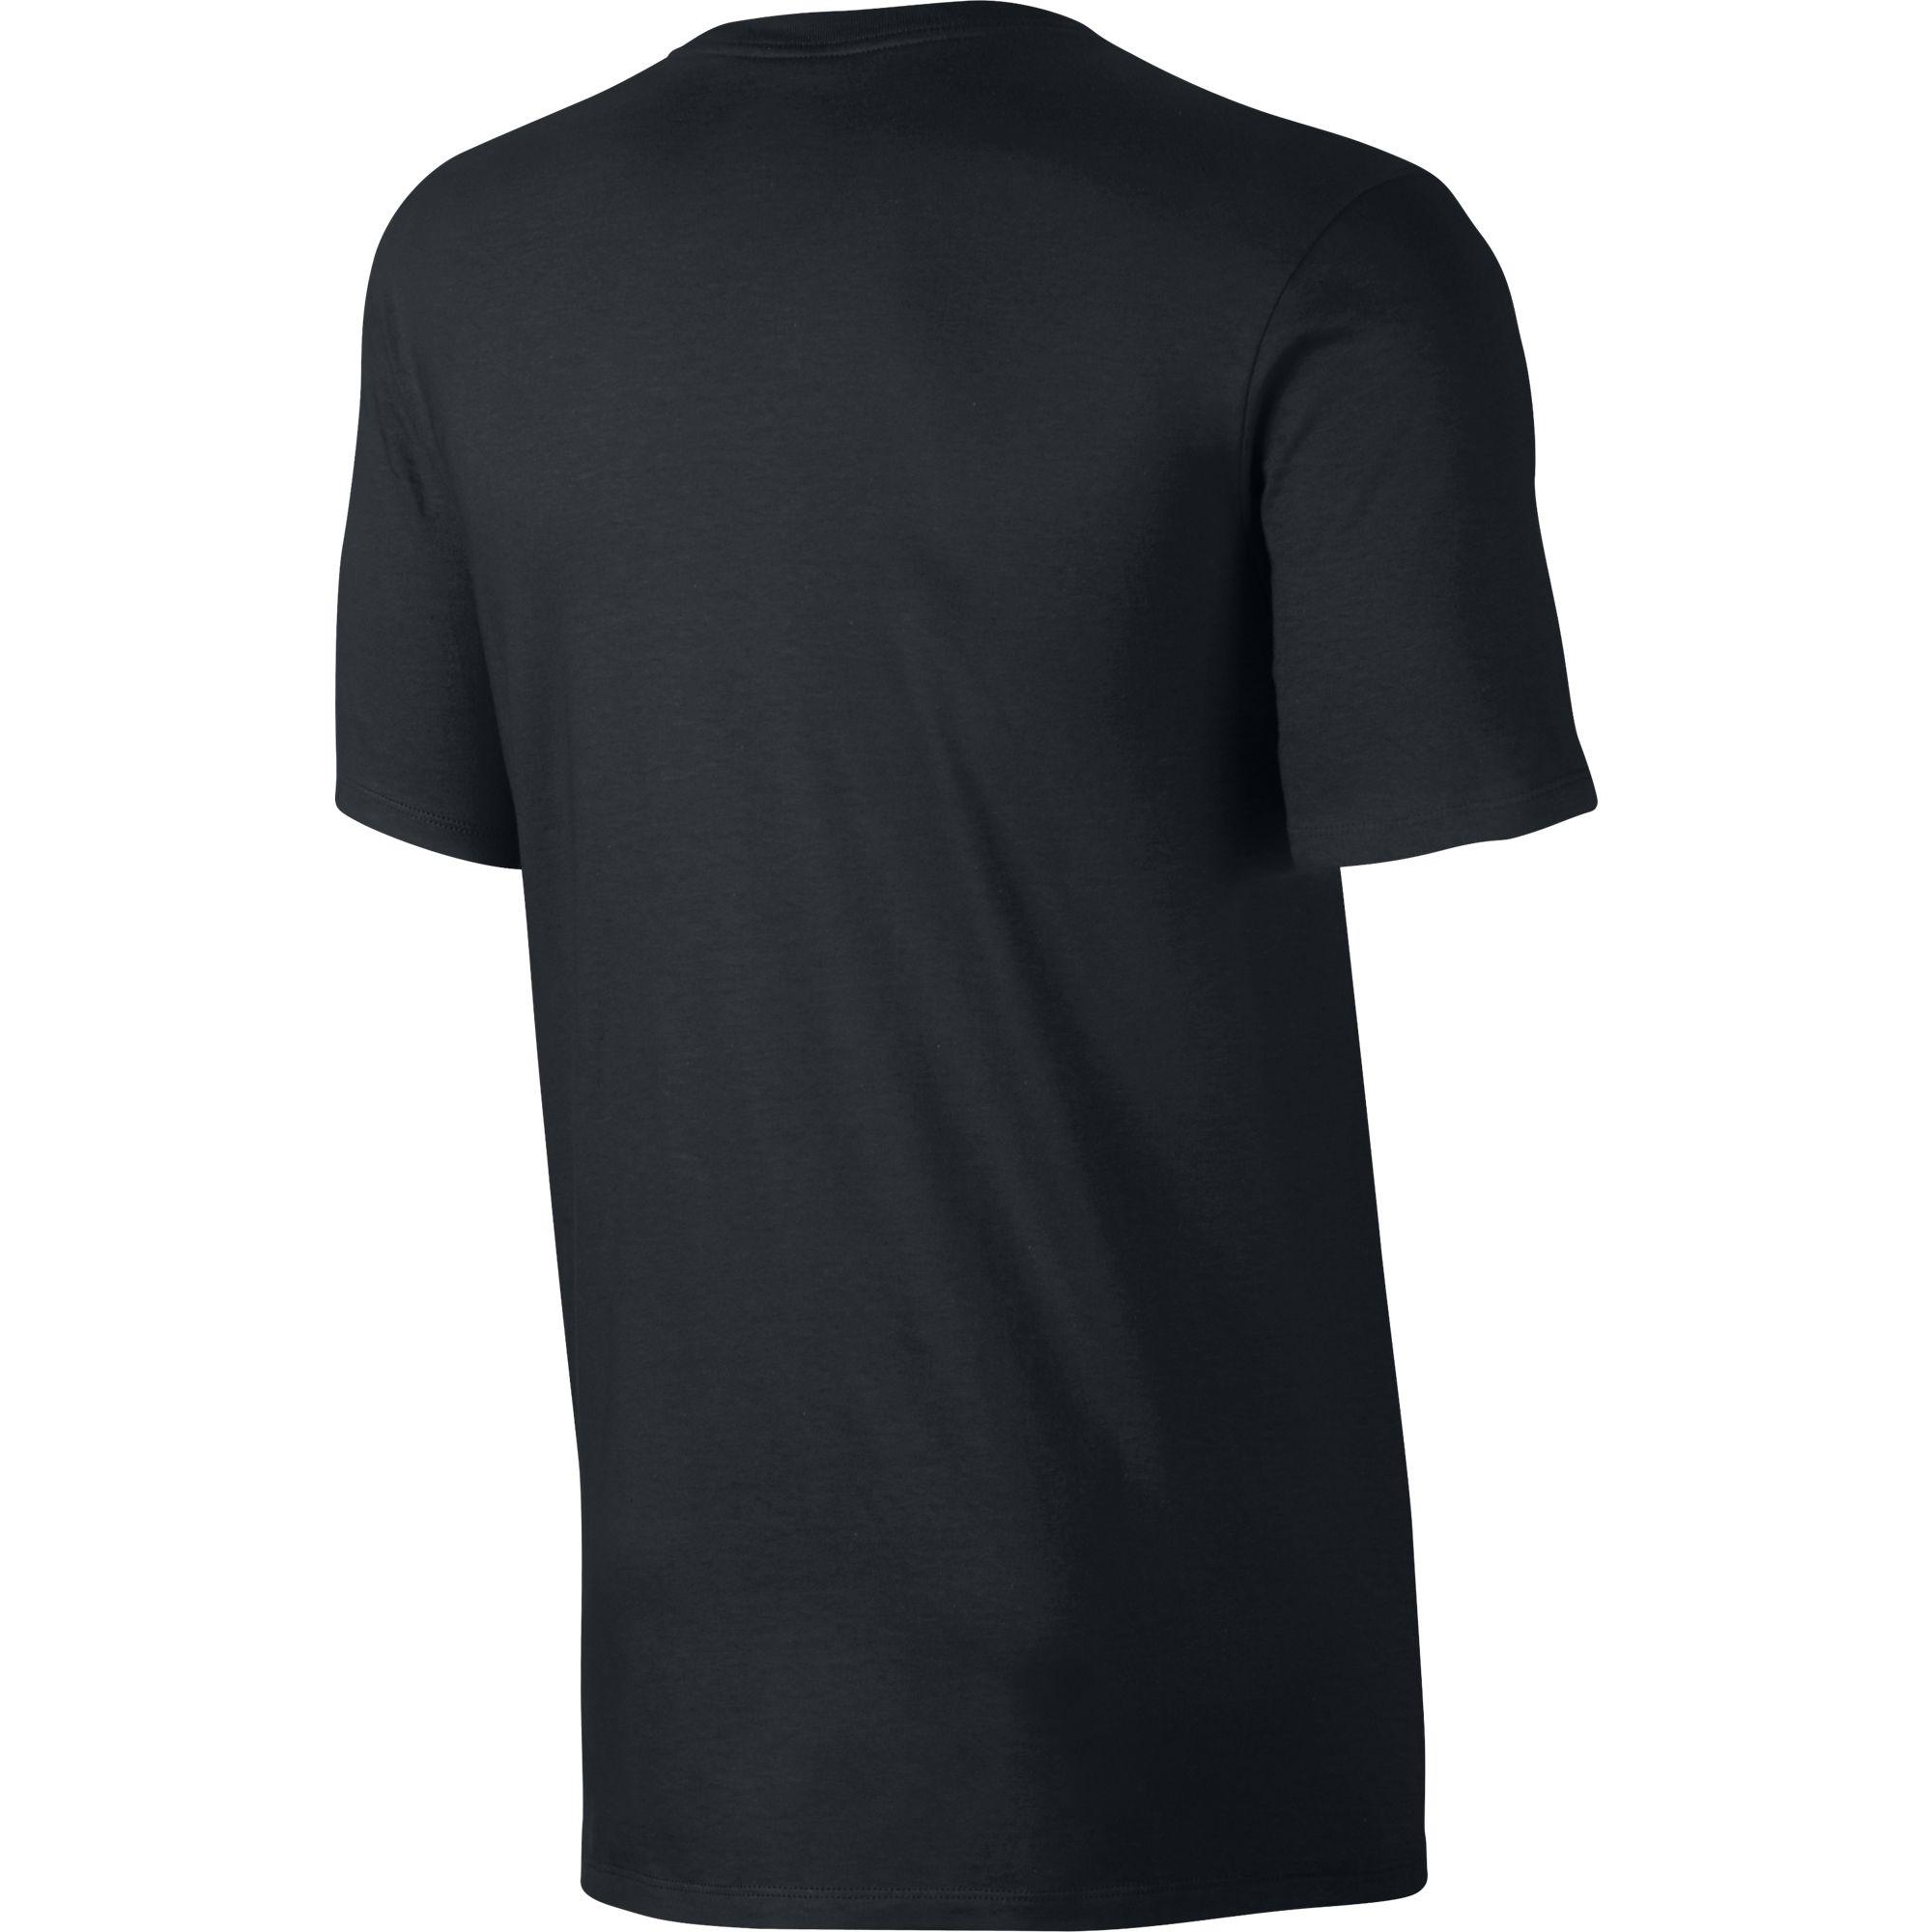 Nike Mens Sportswear T-Shirt - Black/White - Tennisnuts.com